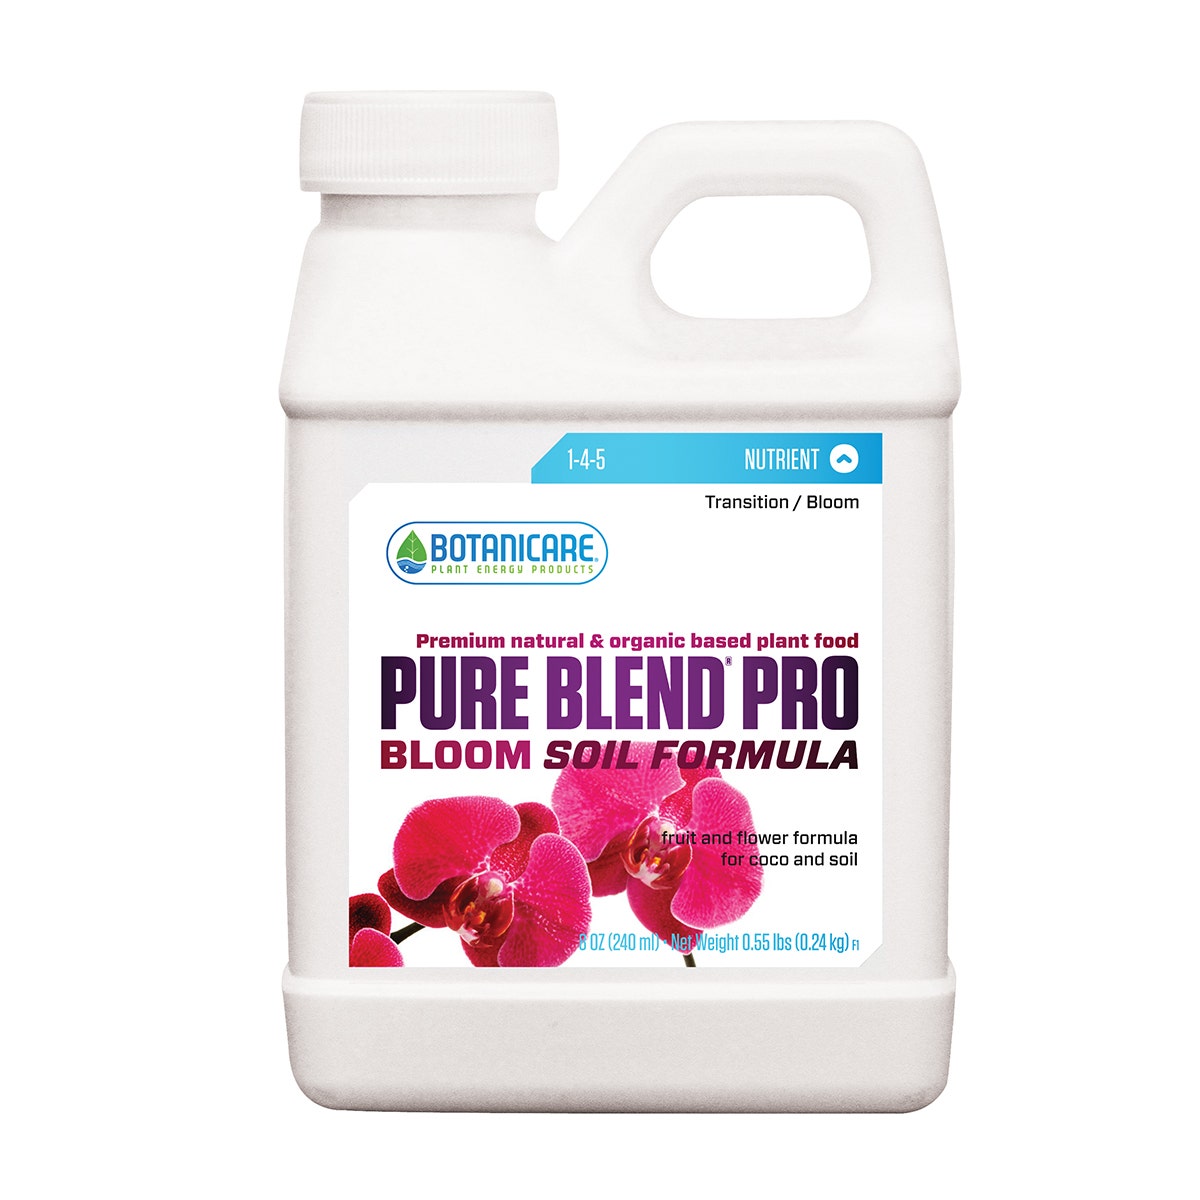 Botanicare Pure Blend Pro Bloom Soil